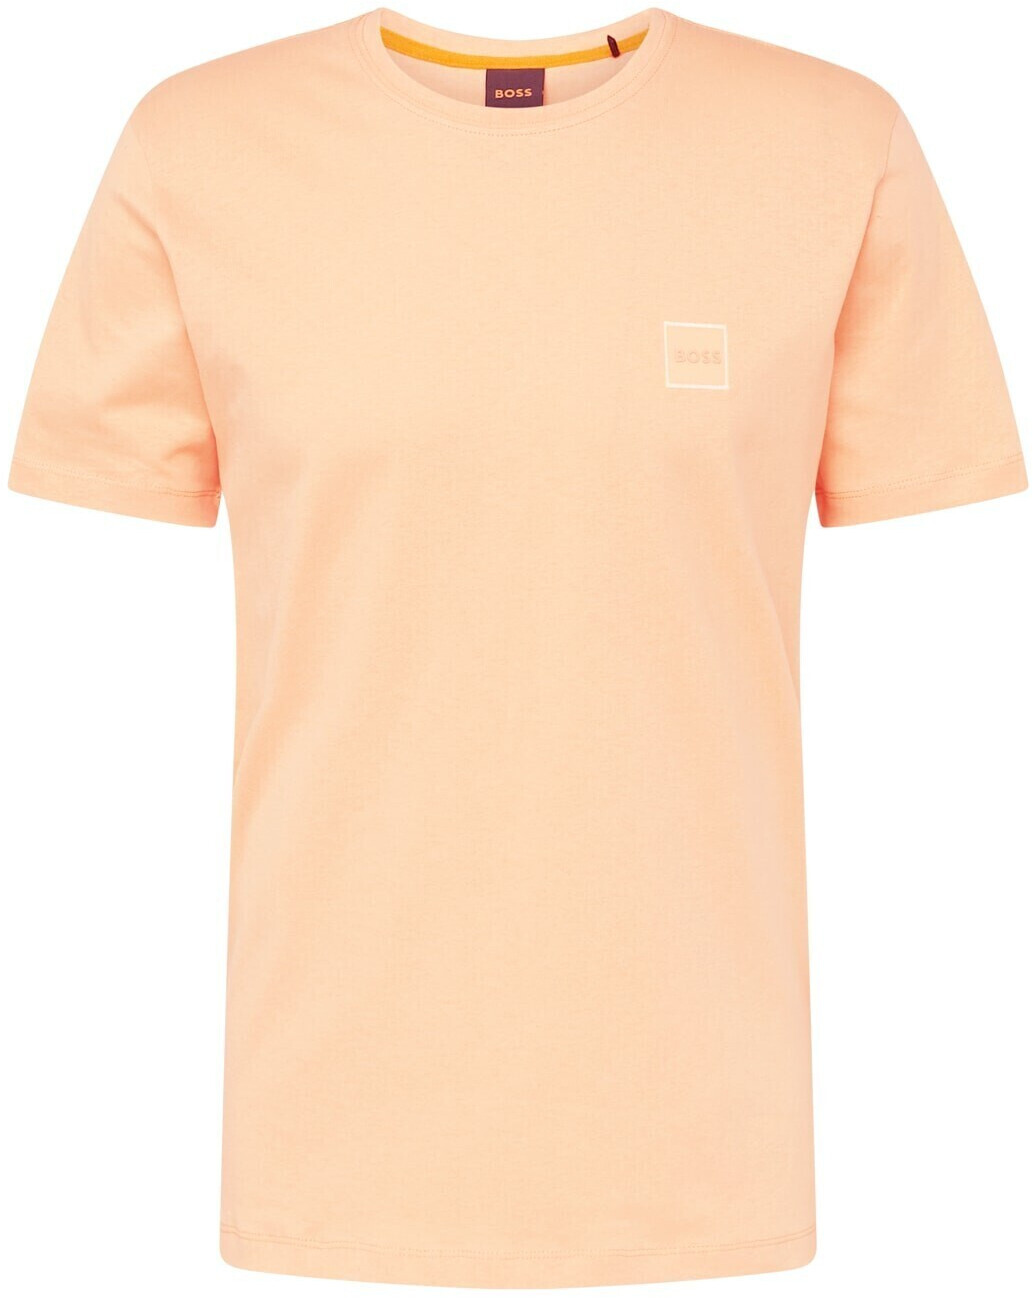 £24.99 from (50472584-833) T-Shirt Boss Tales Short Buy on Sleeve – Deals orange (Today) Best Hugo